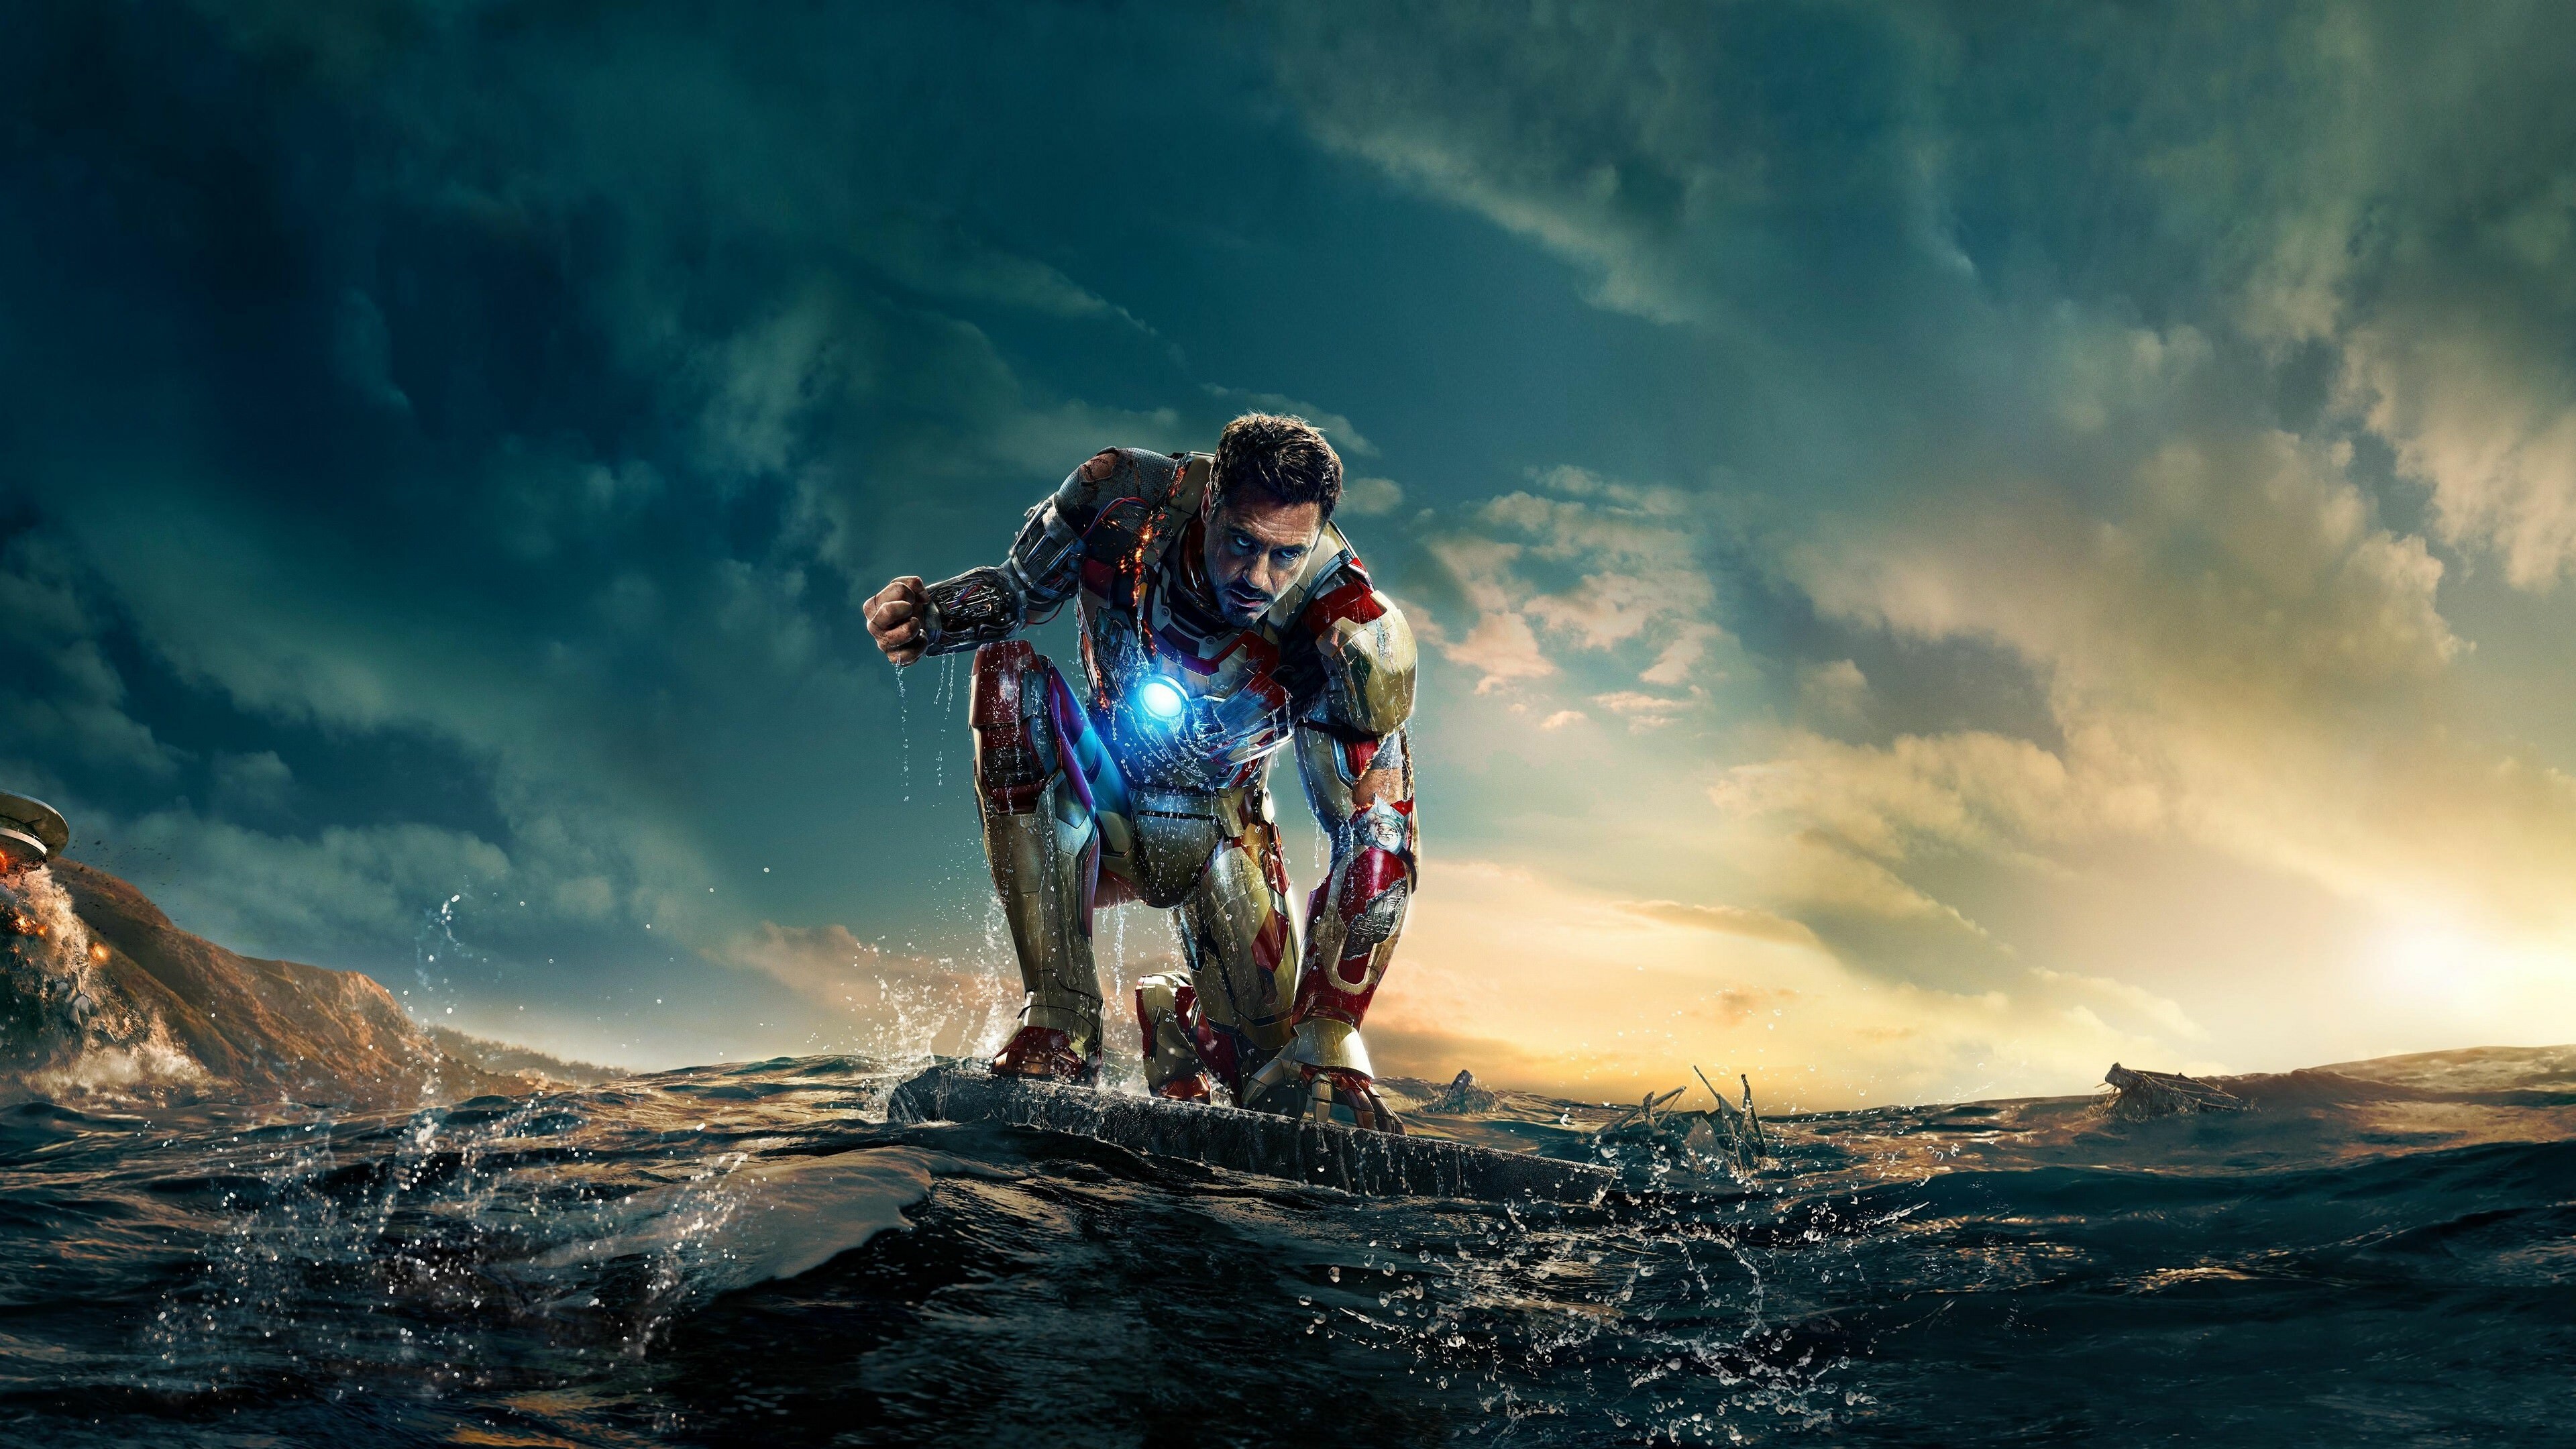 Marvel: Robert Downey Jr. as Iron Man, the benefactor of the Avengers. 3840x2160 4K Wallpaper.